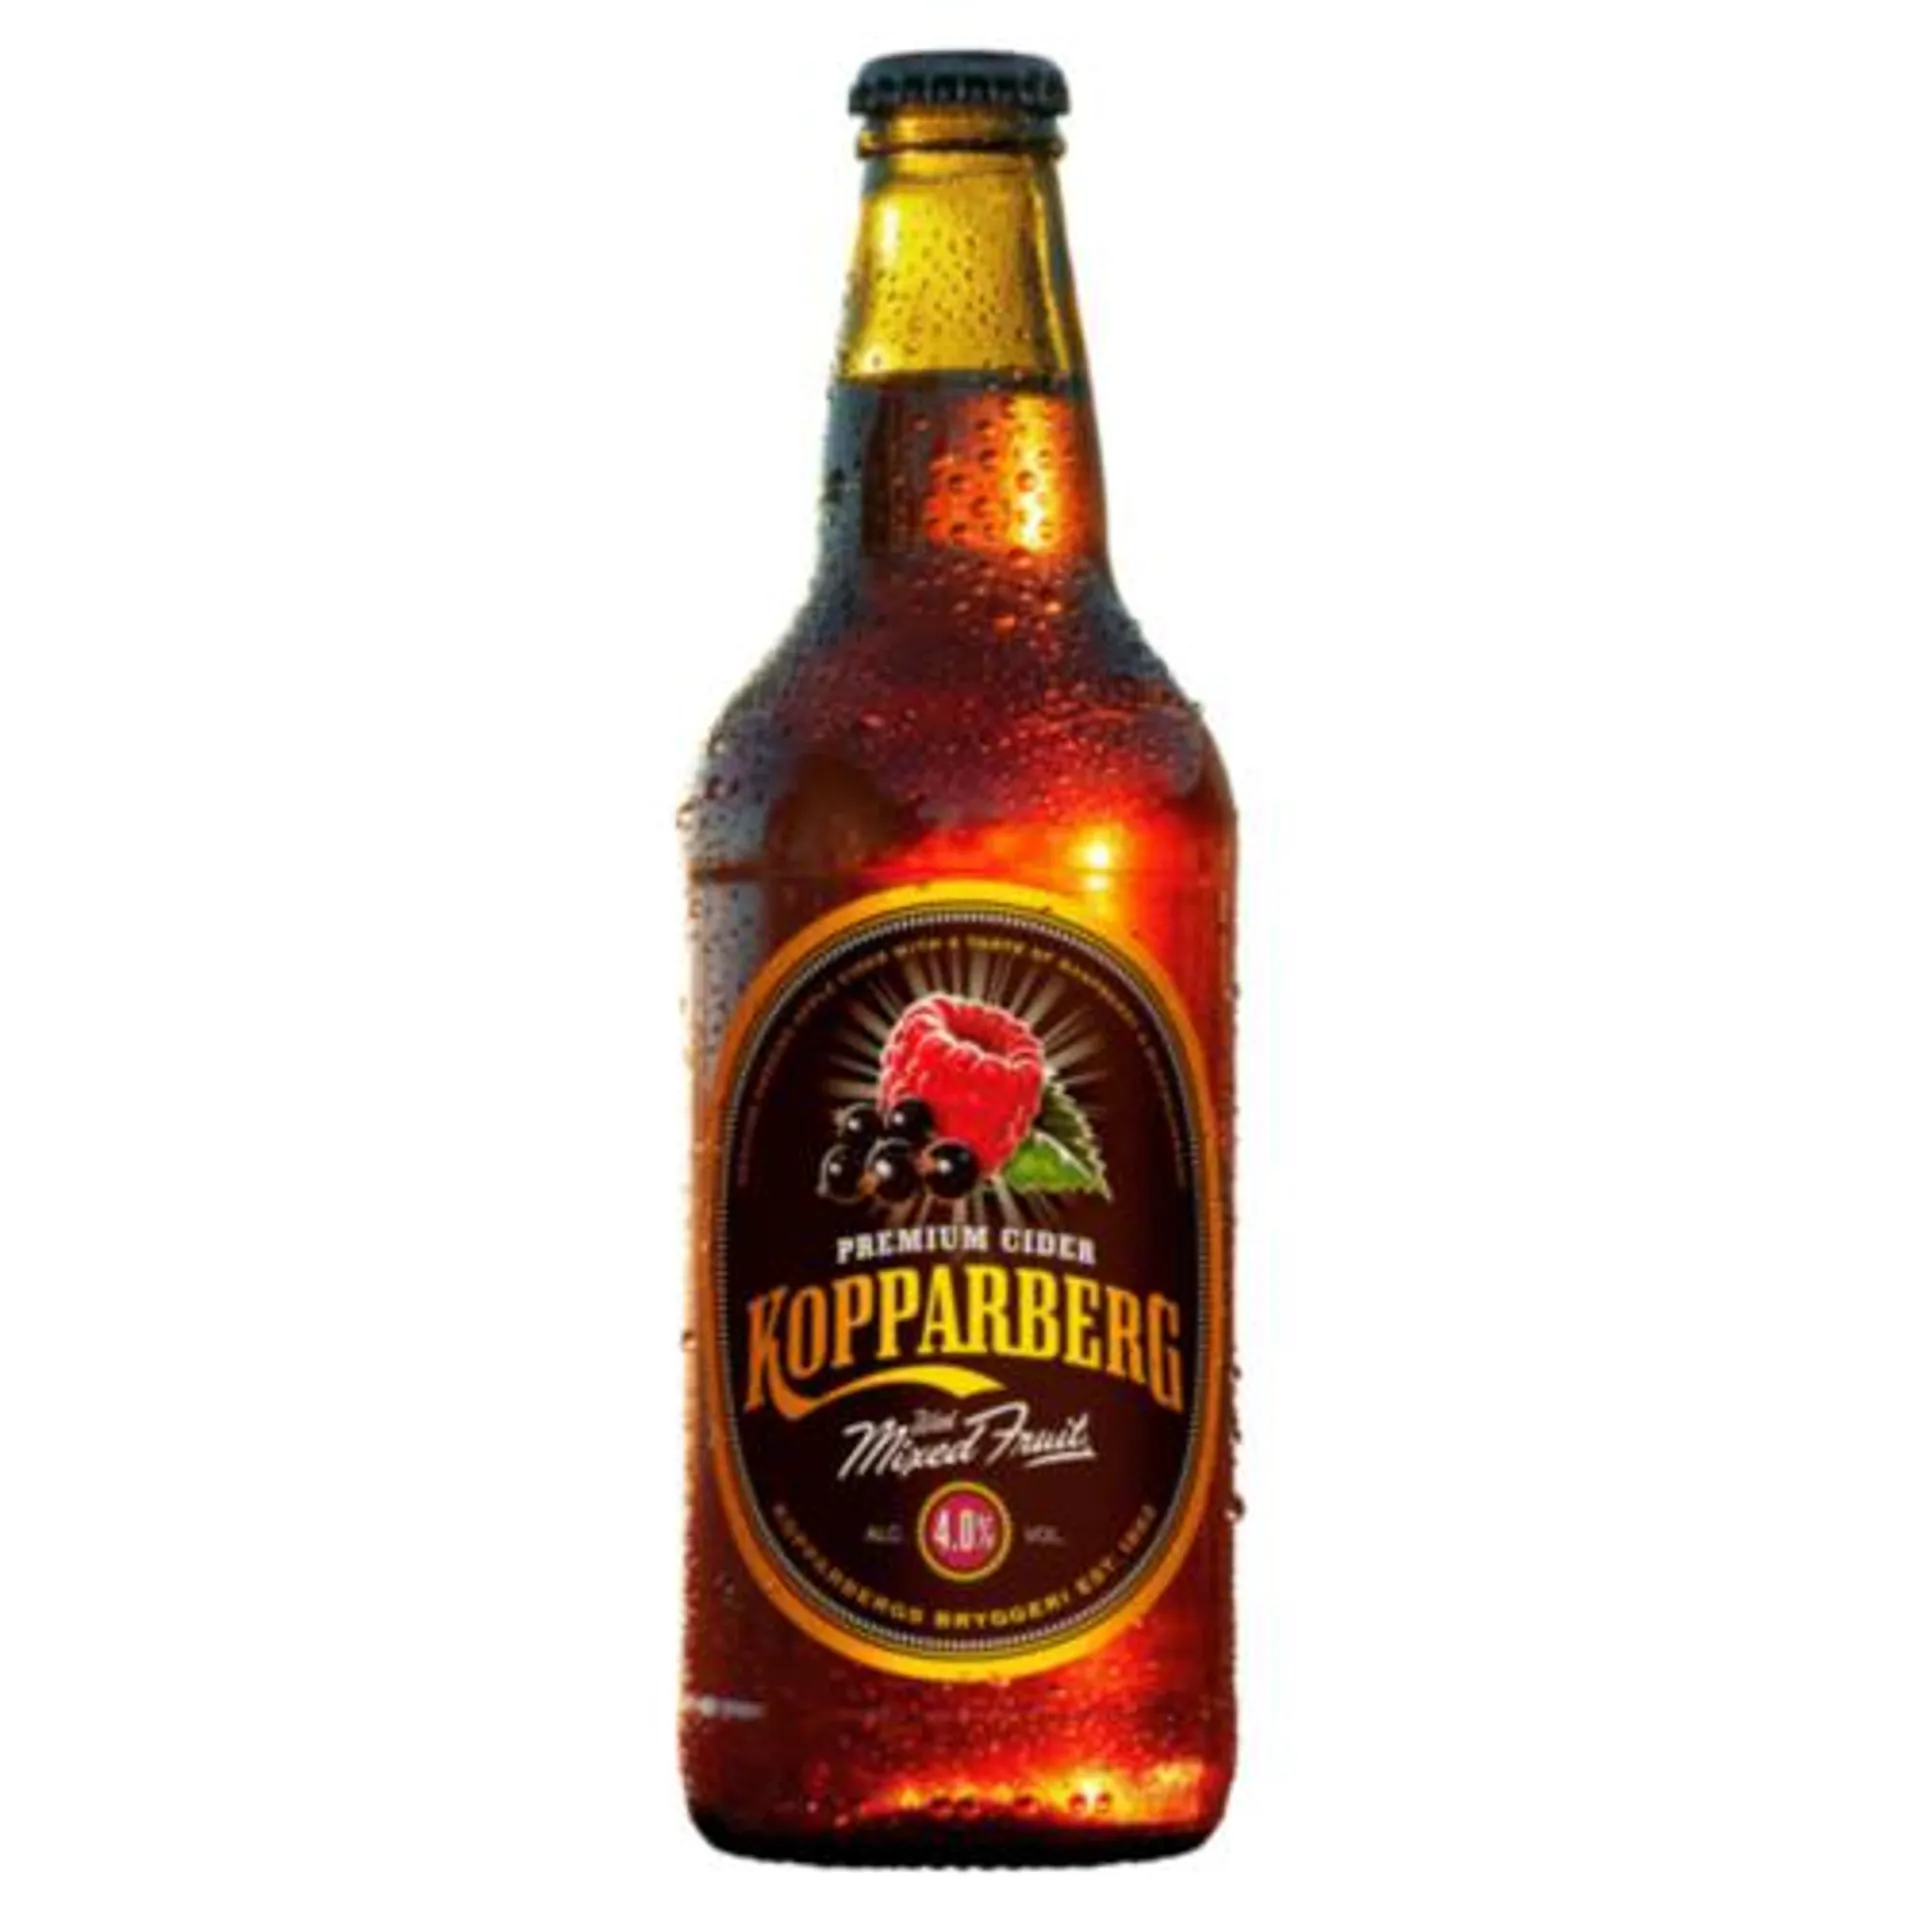 Kopparberg Mixed Fruit Premium Cider